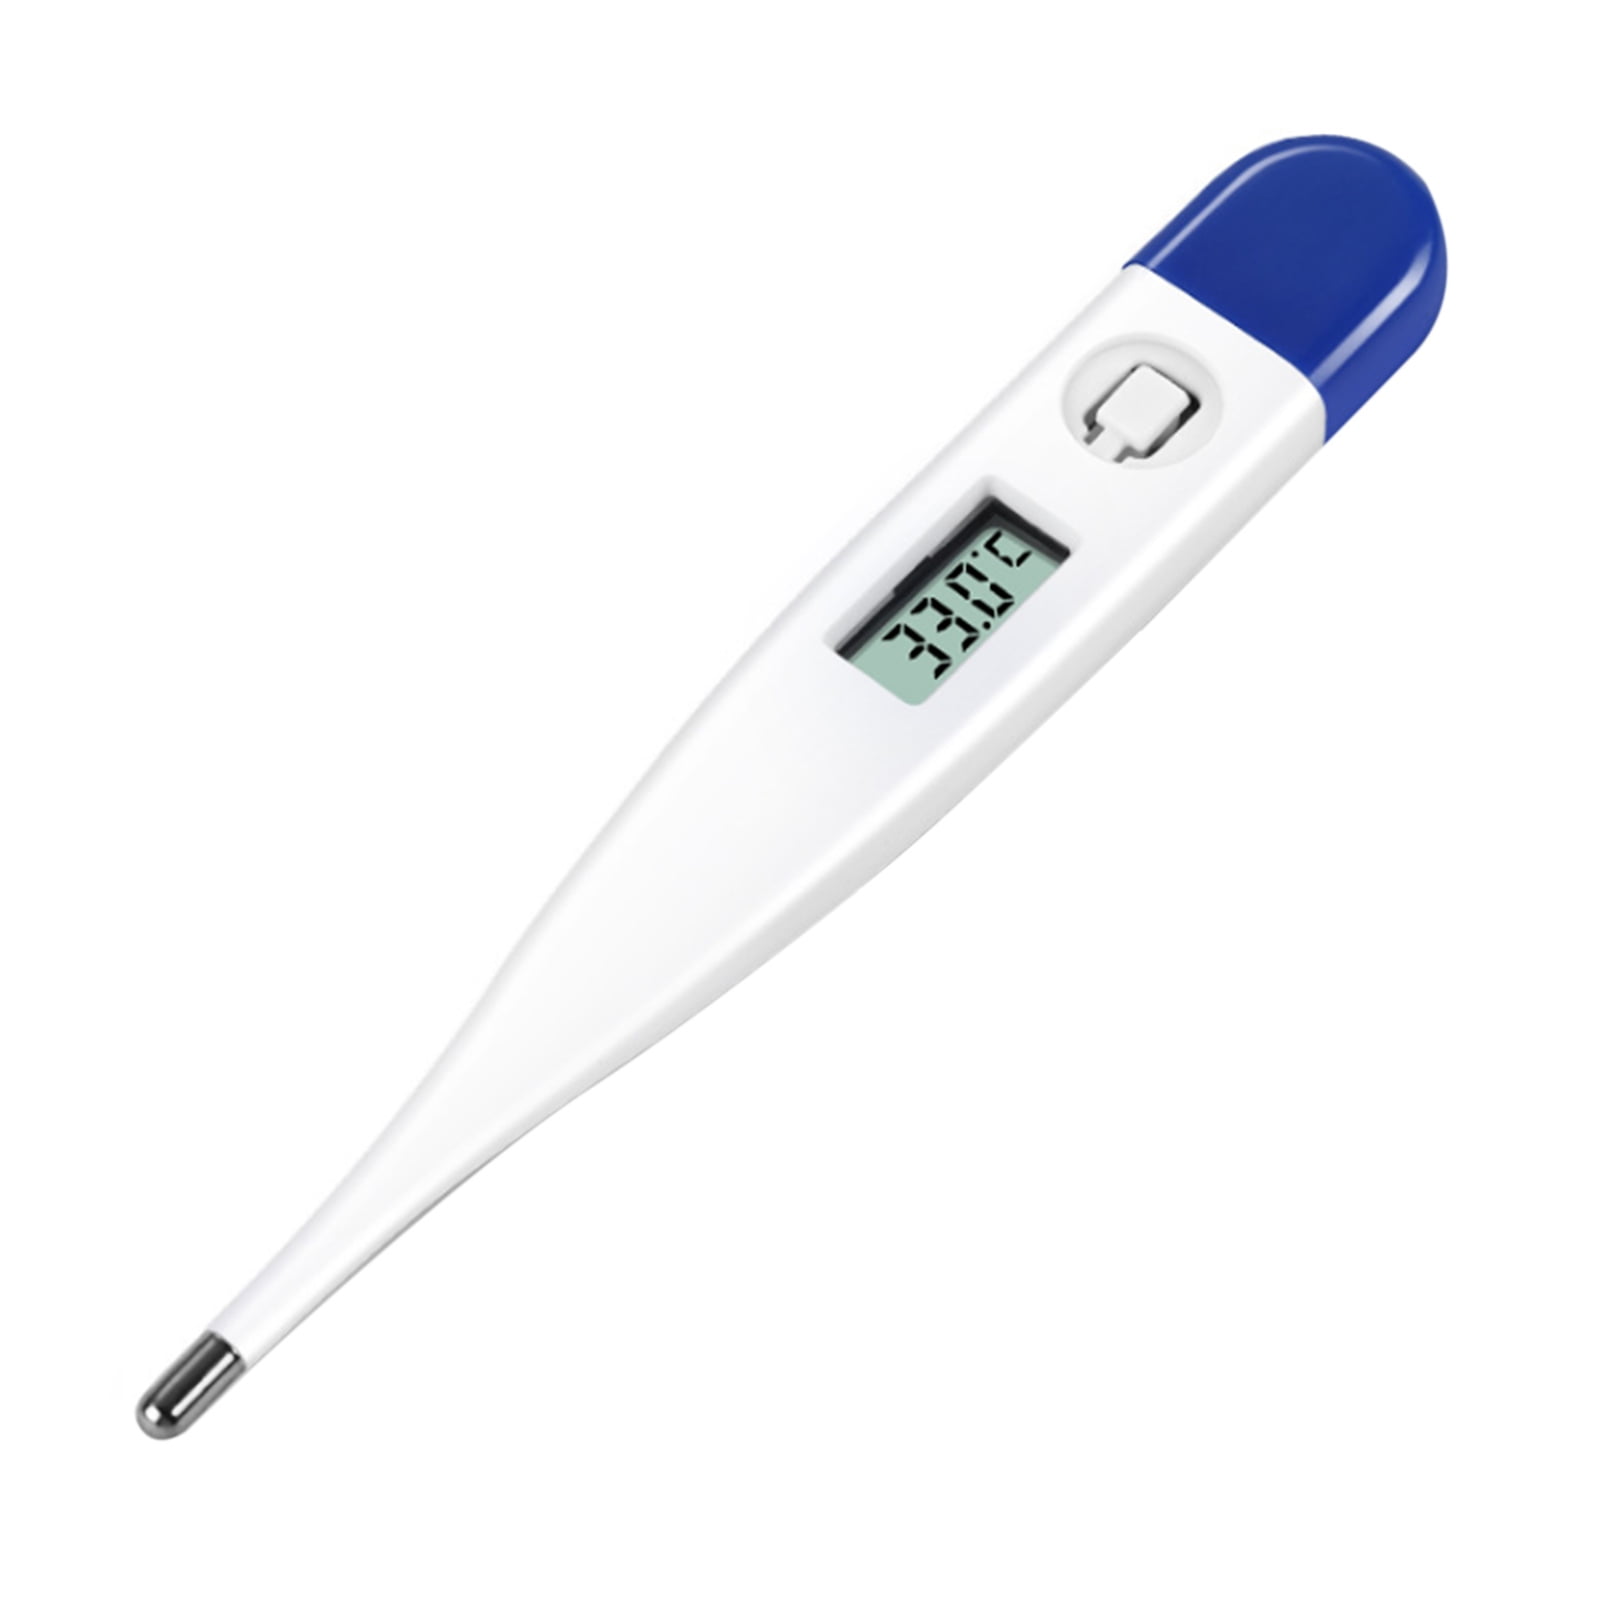 Yamasaki Child Adult Body Digital LCD Thermometer Temperature Measurement Meter 